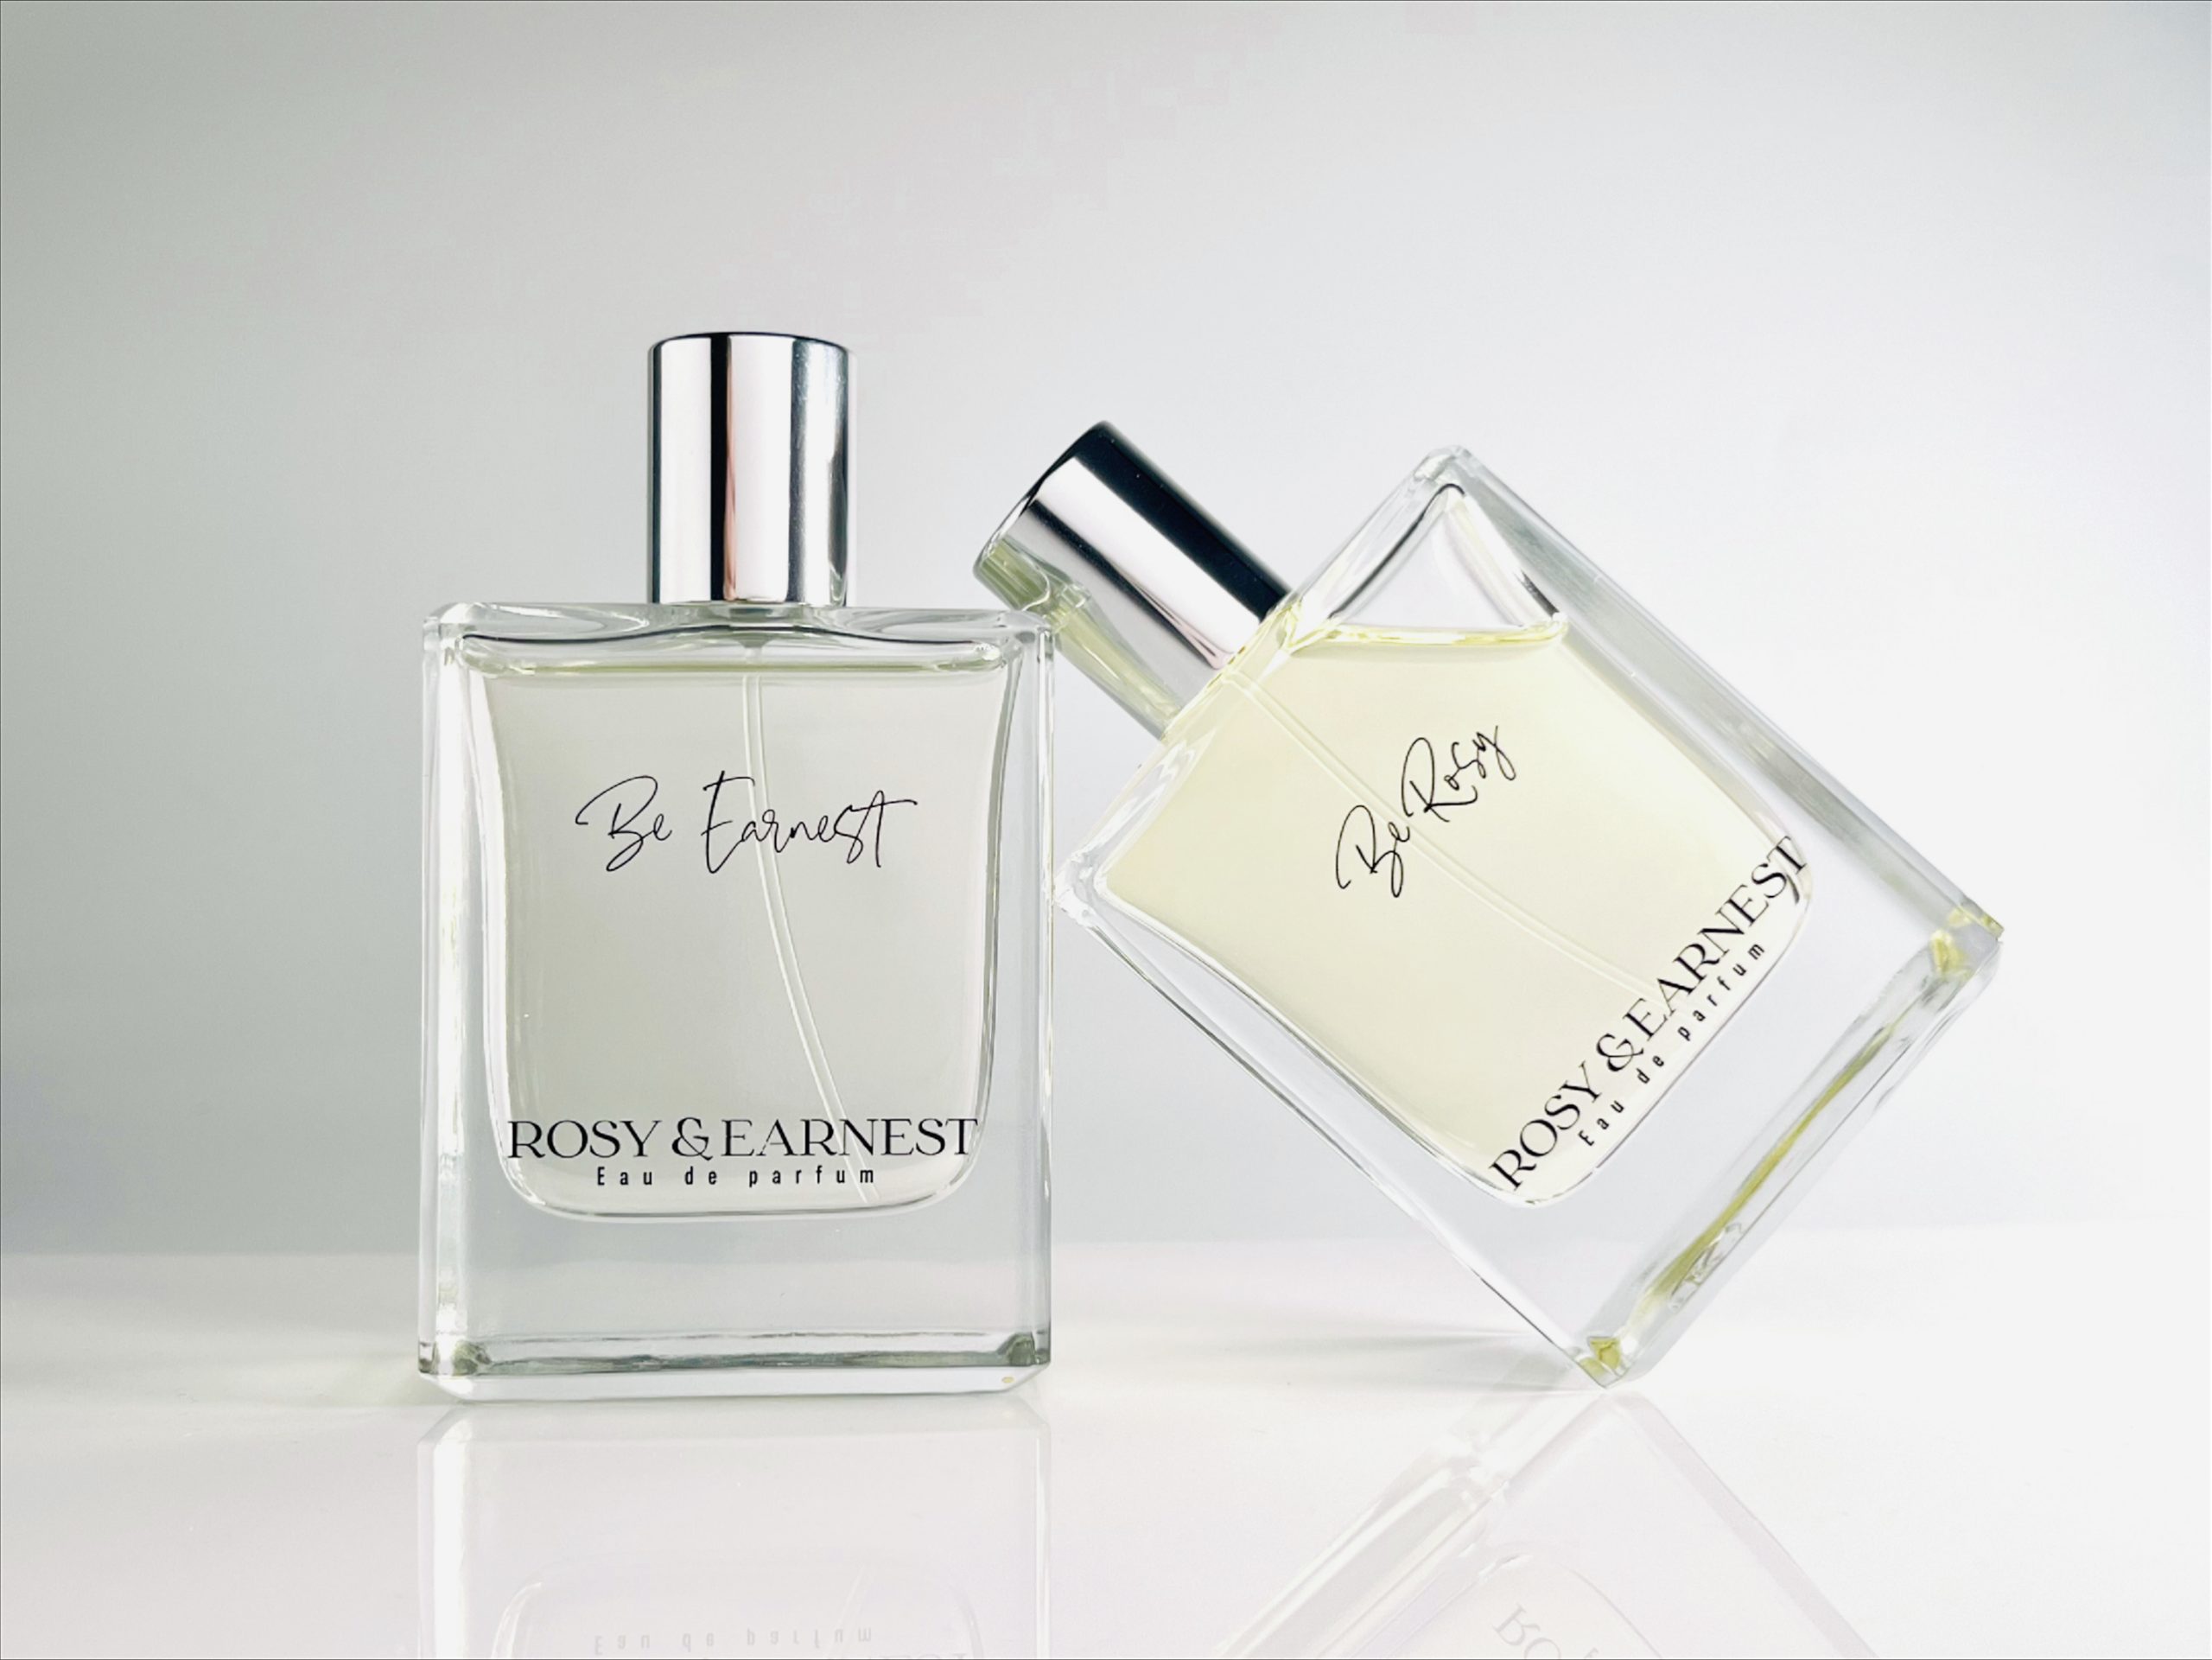 Rosy & Earnest perfume